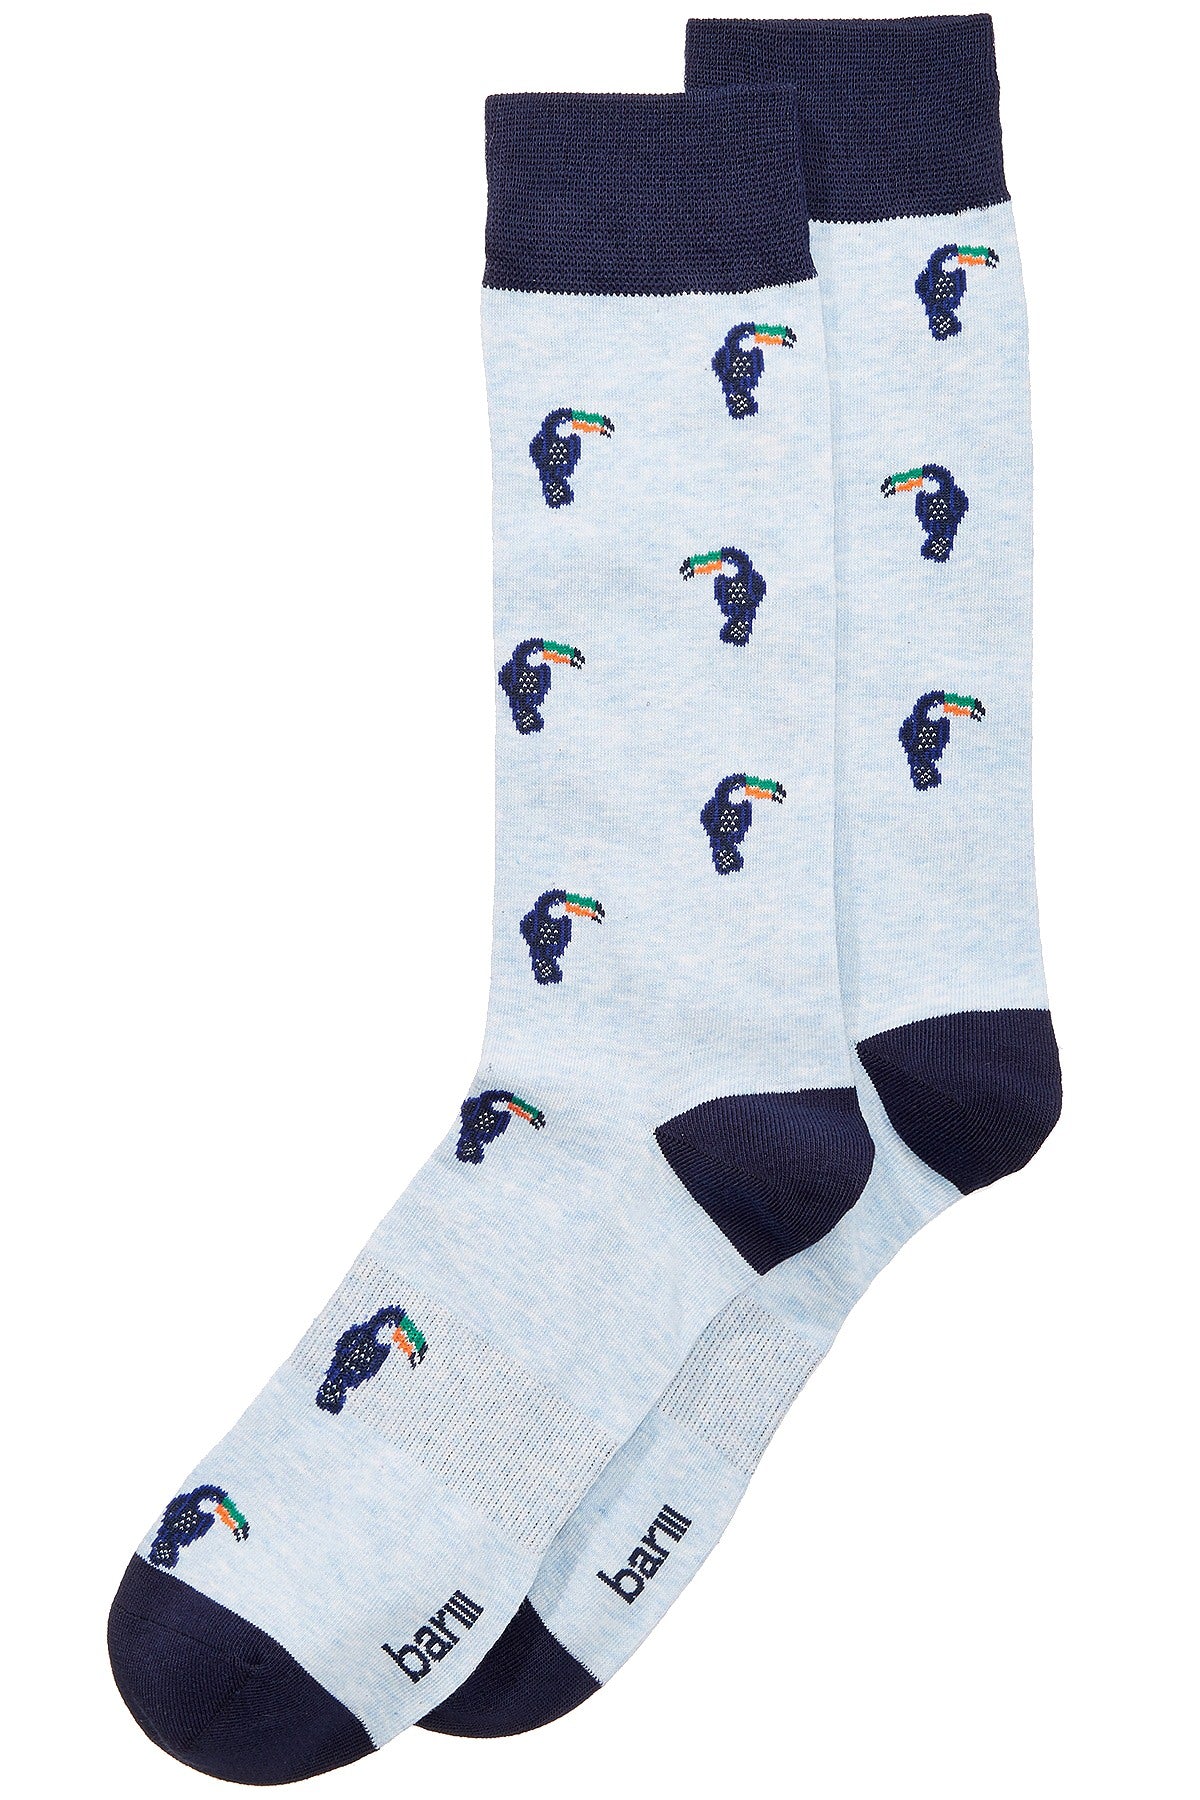 BAR III Light-Blue/Navy Toucan Socks